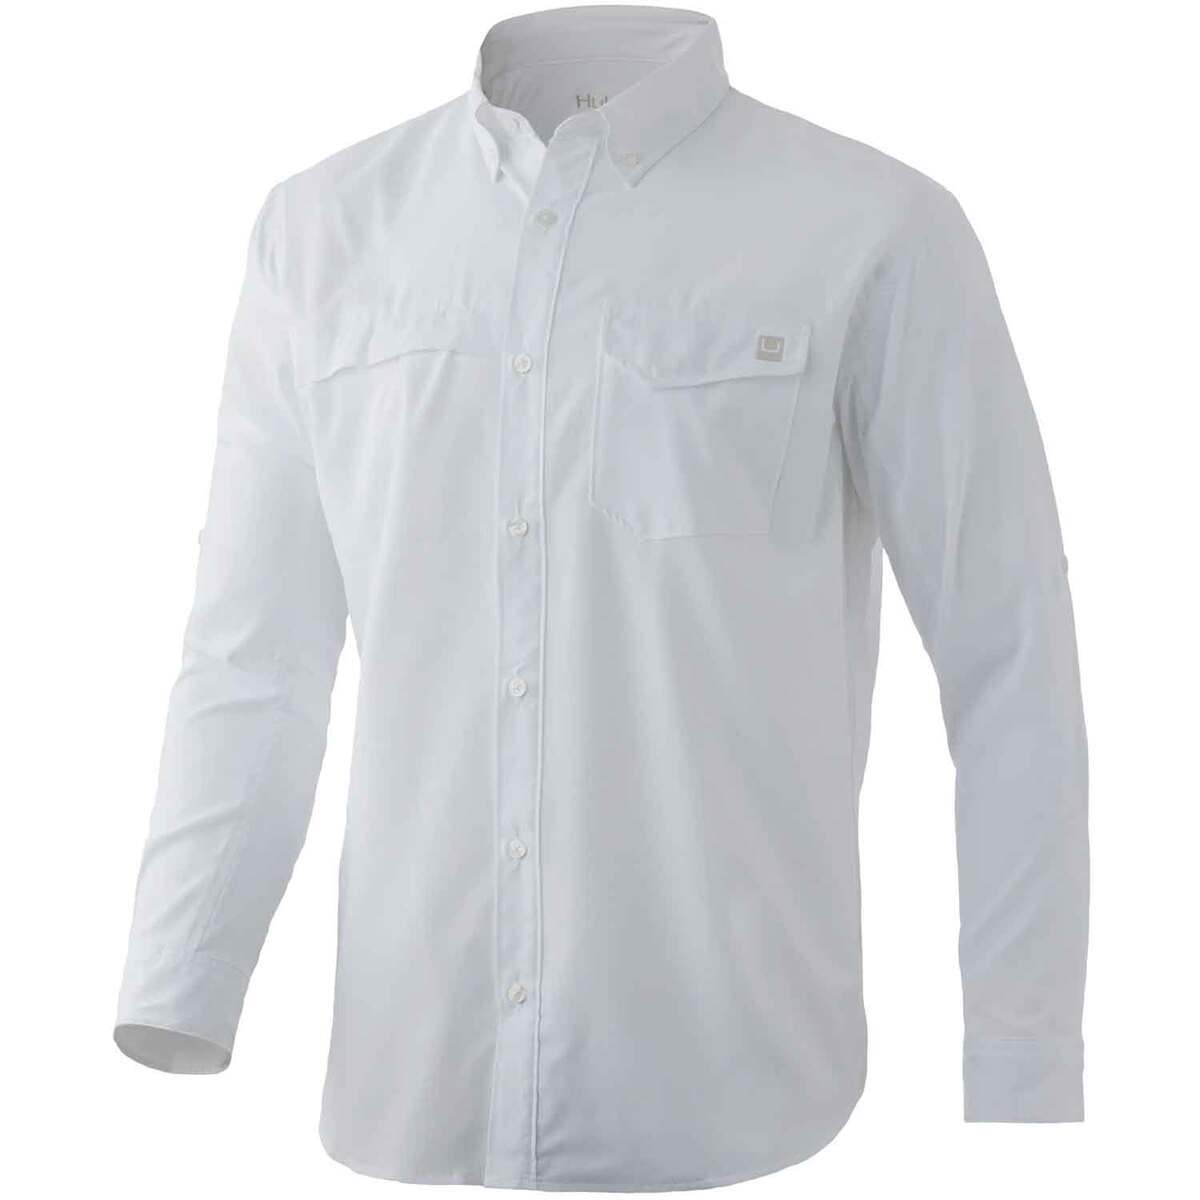 Huk Long Sleeve U Patch Pocket T-Shirt - Men's Baked Clay L